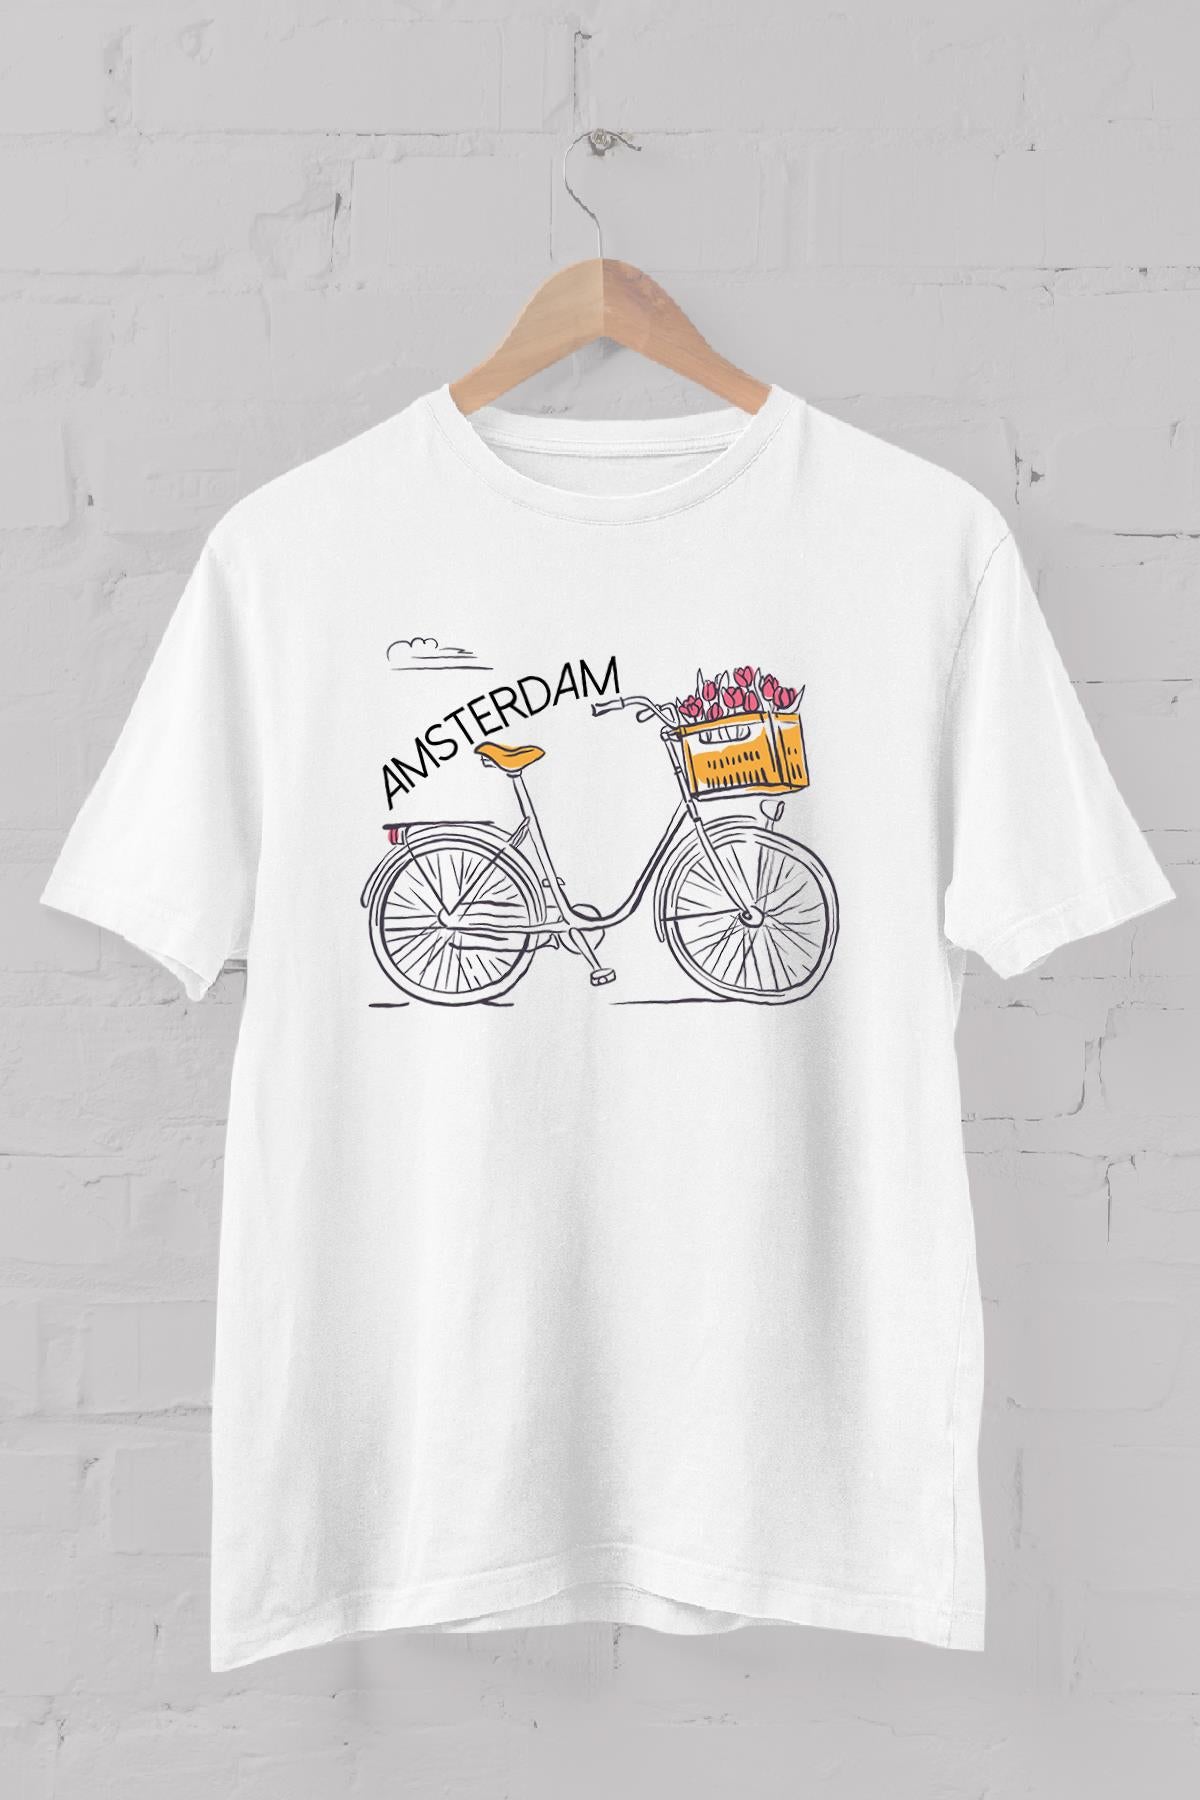 Amsterdam Bicycle Printed Crew Neck Men's T -shirt